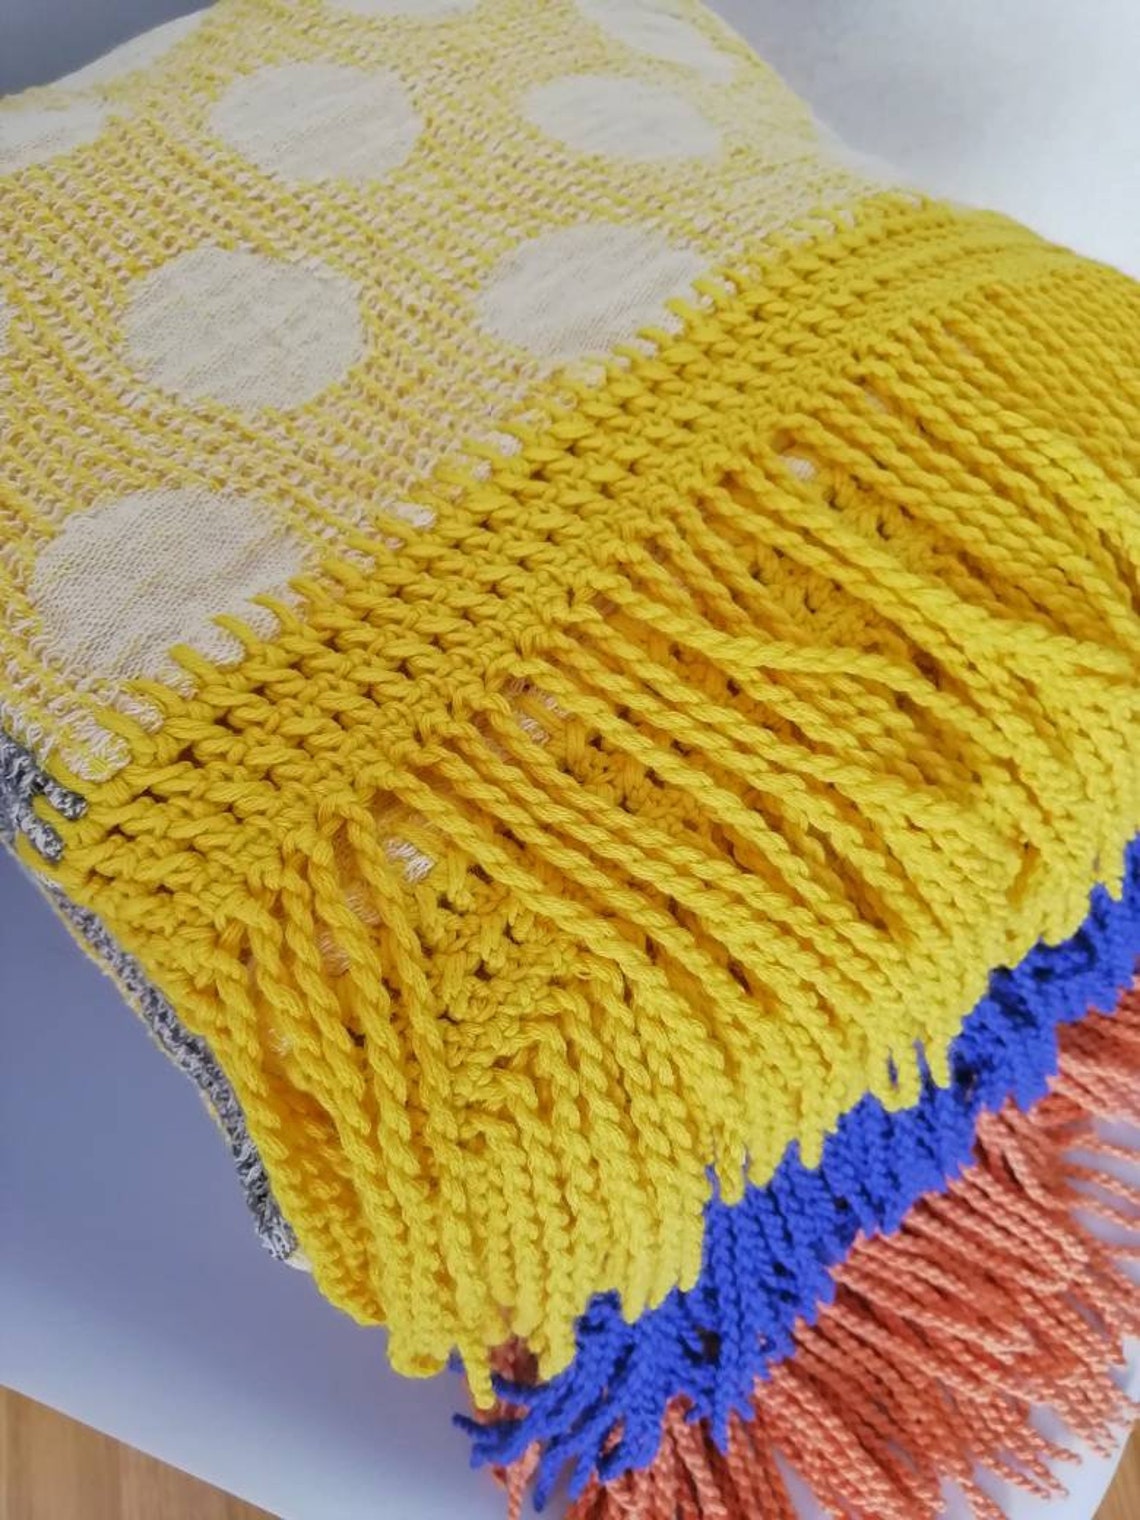 CROCHET PATTERN with fringe trim / crochet lace / cottagecore | Etsy